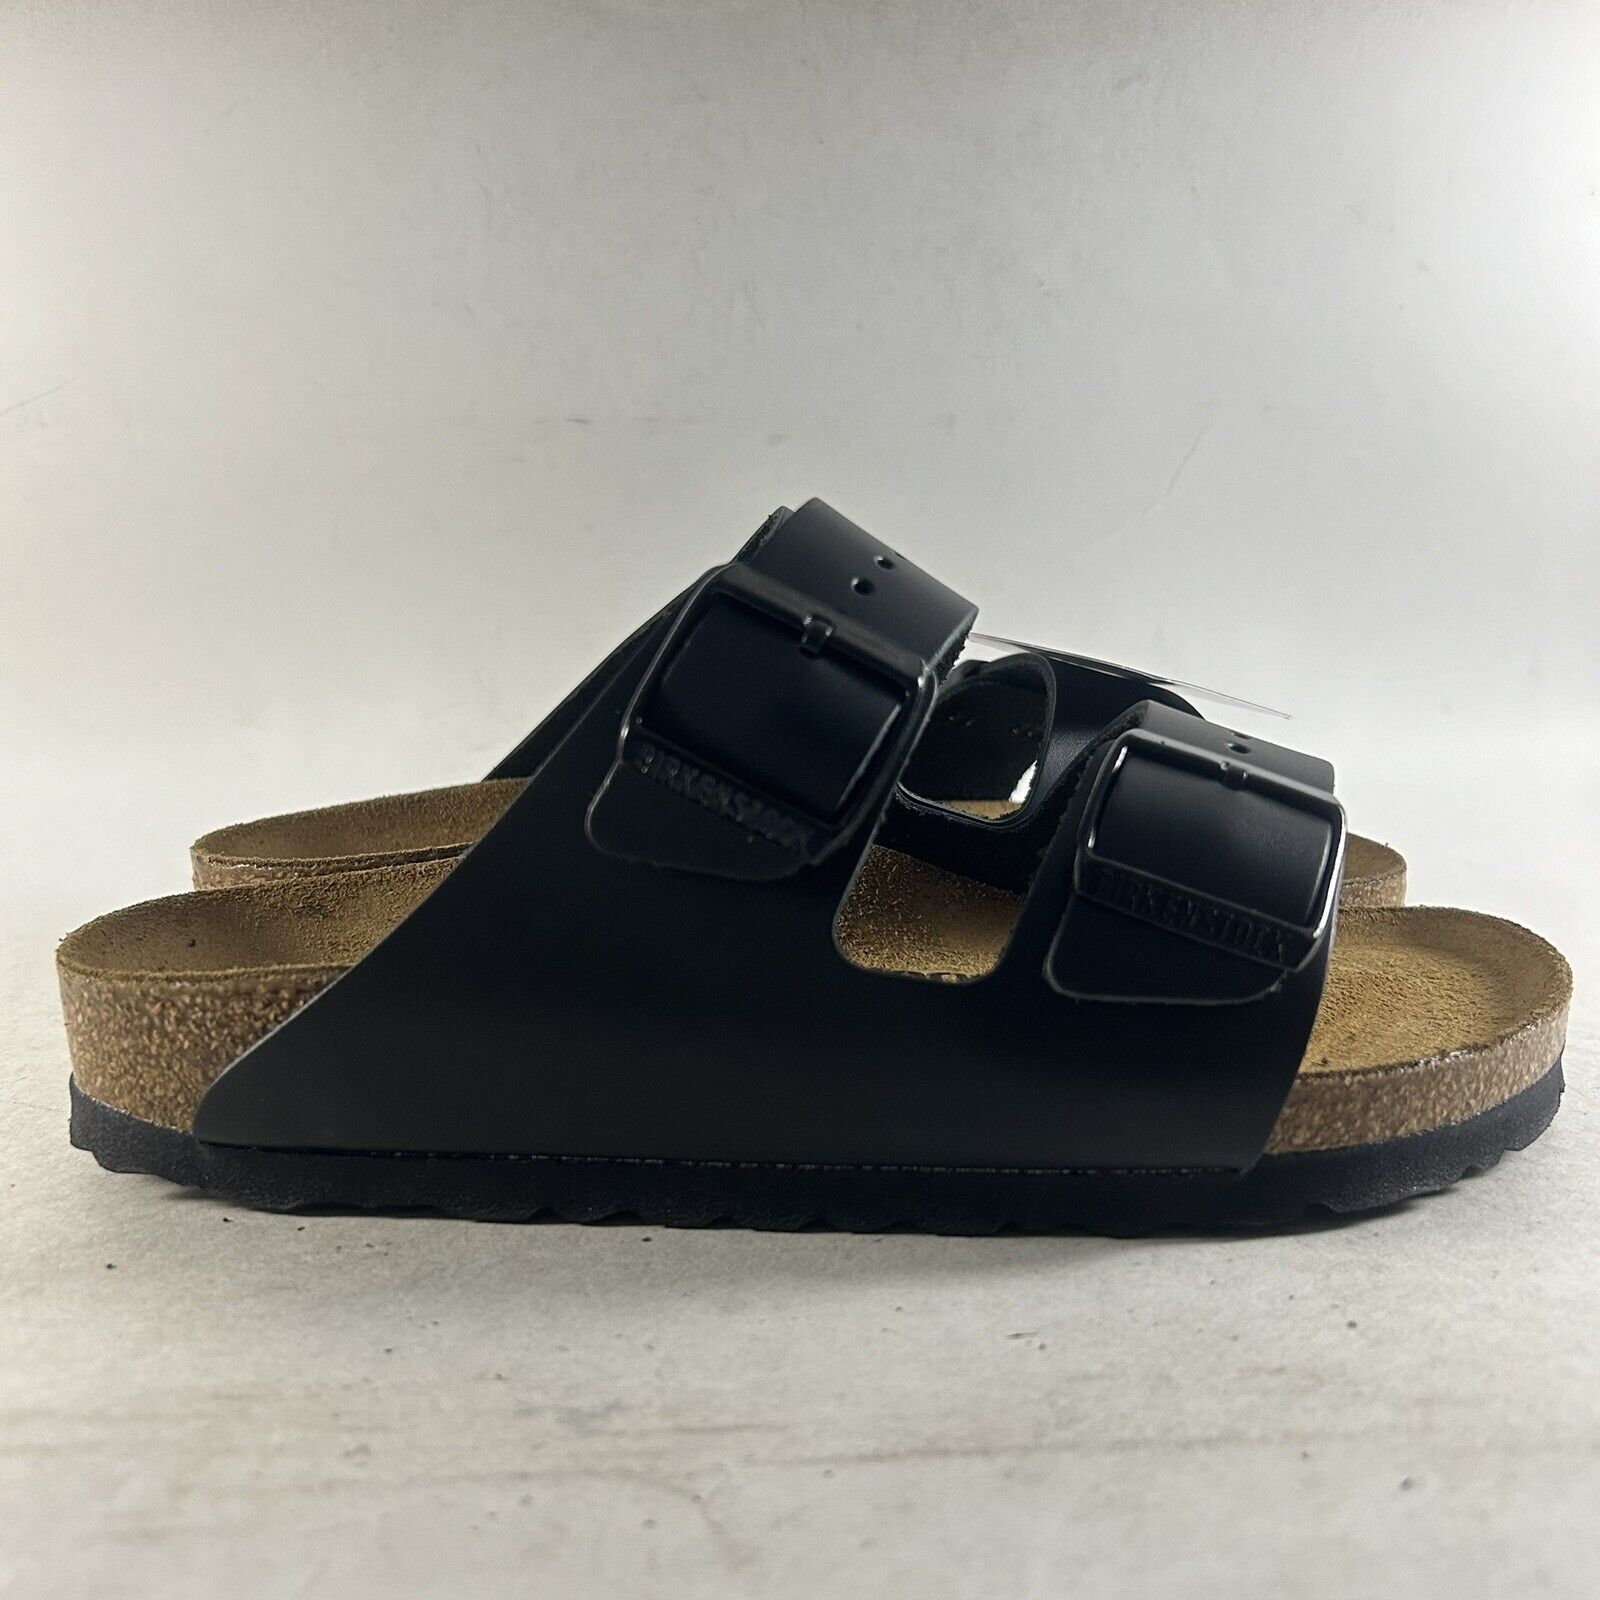 NEW Birkenstock Arizona Women’s Leather Buckle Sandals Black Size EU 38 US 7